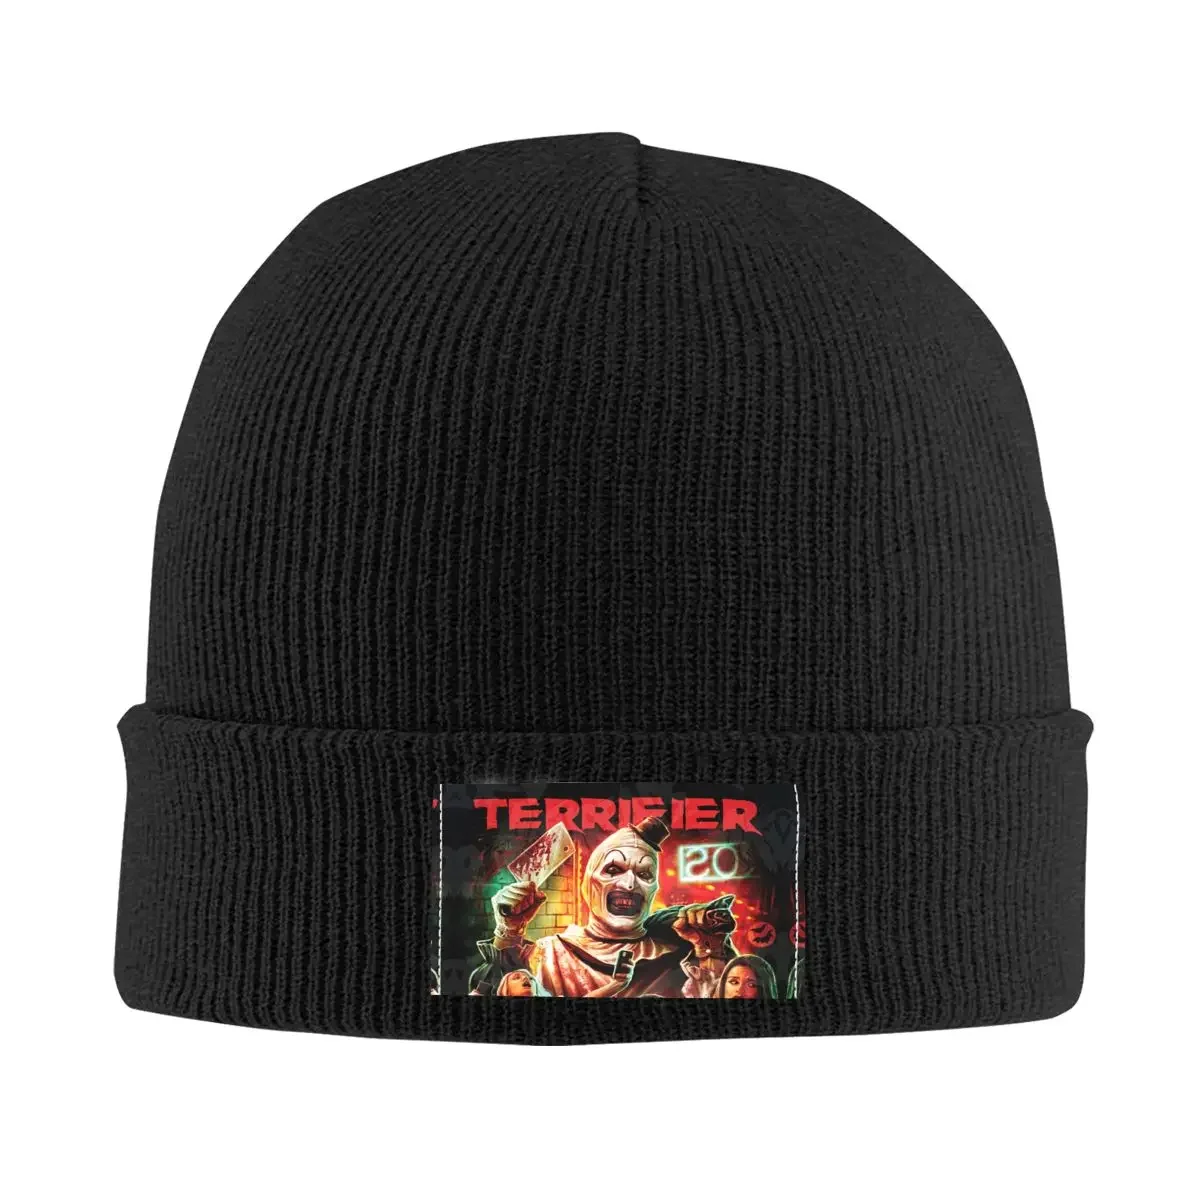 

Horror Movie Terrifier Bonnet Hats Fashion Knitted Hat For Men Women Autumn Winter Warm Halloween Clown Skullies Beanies Caps